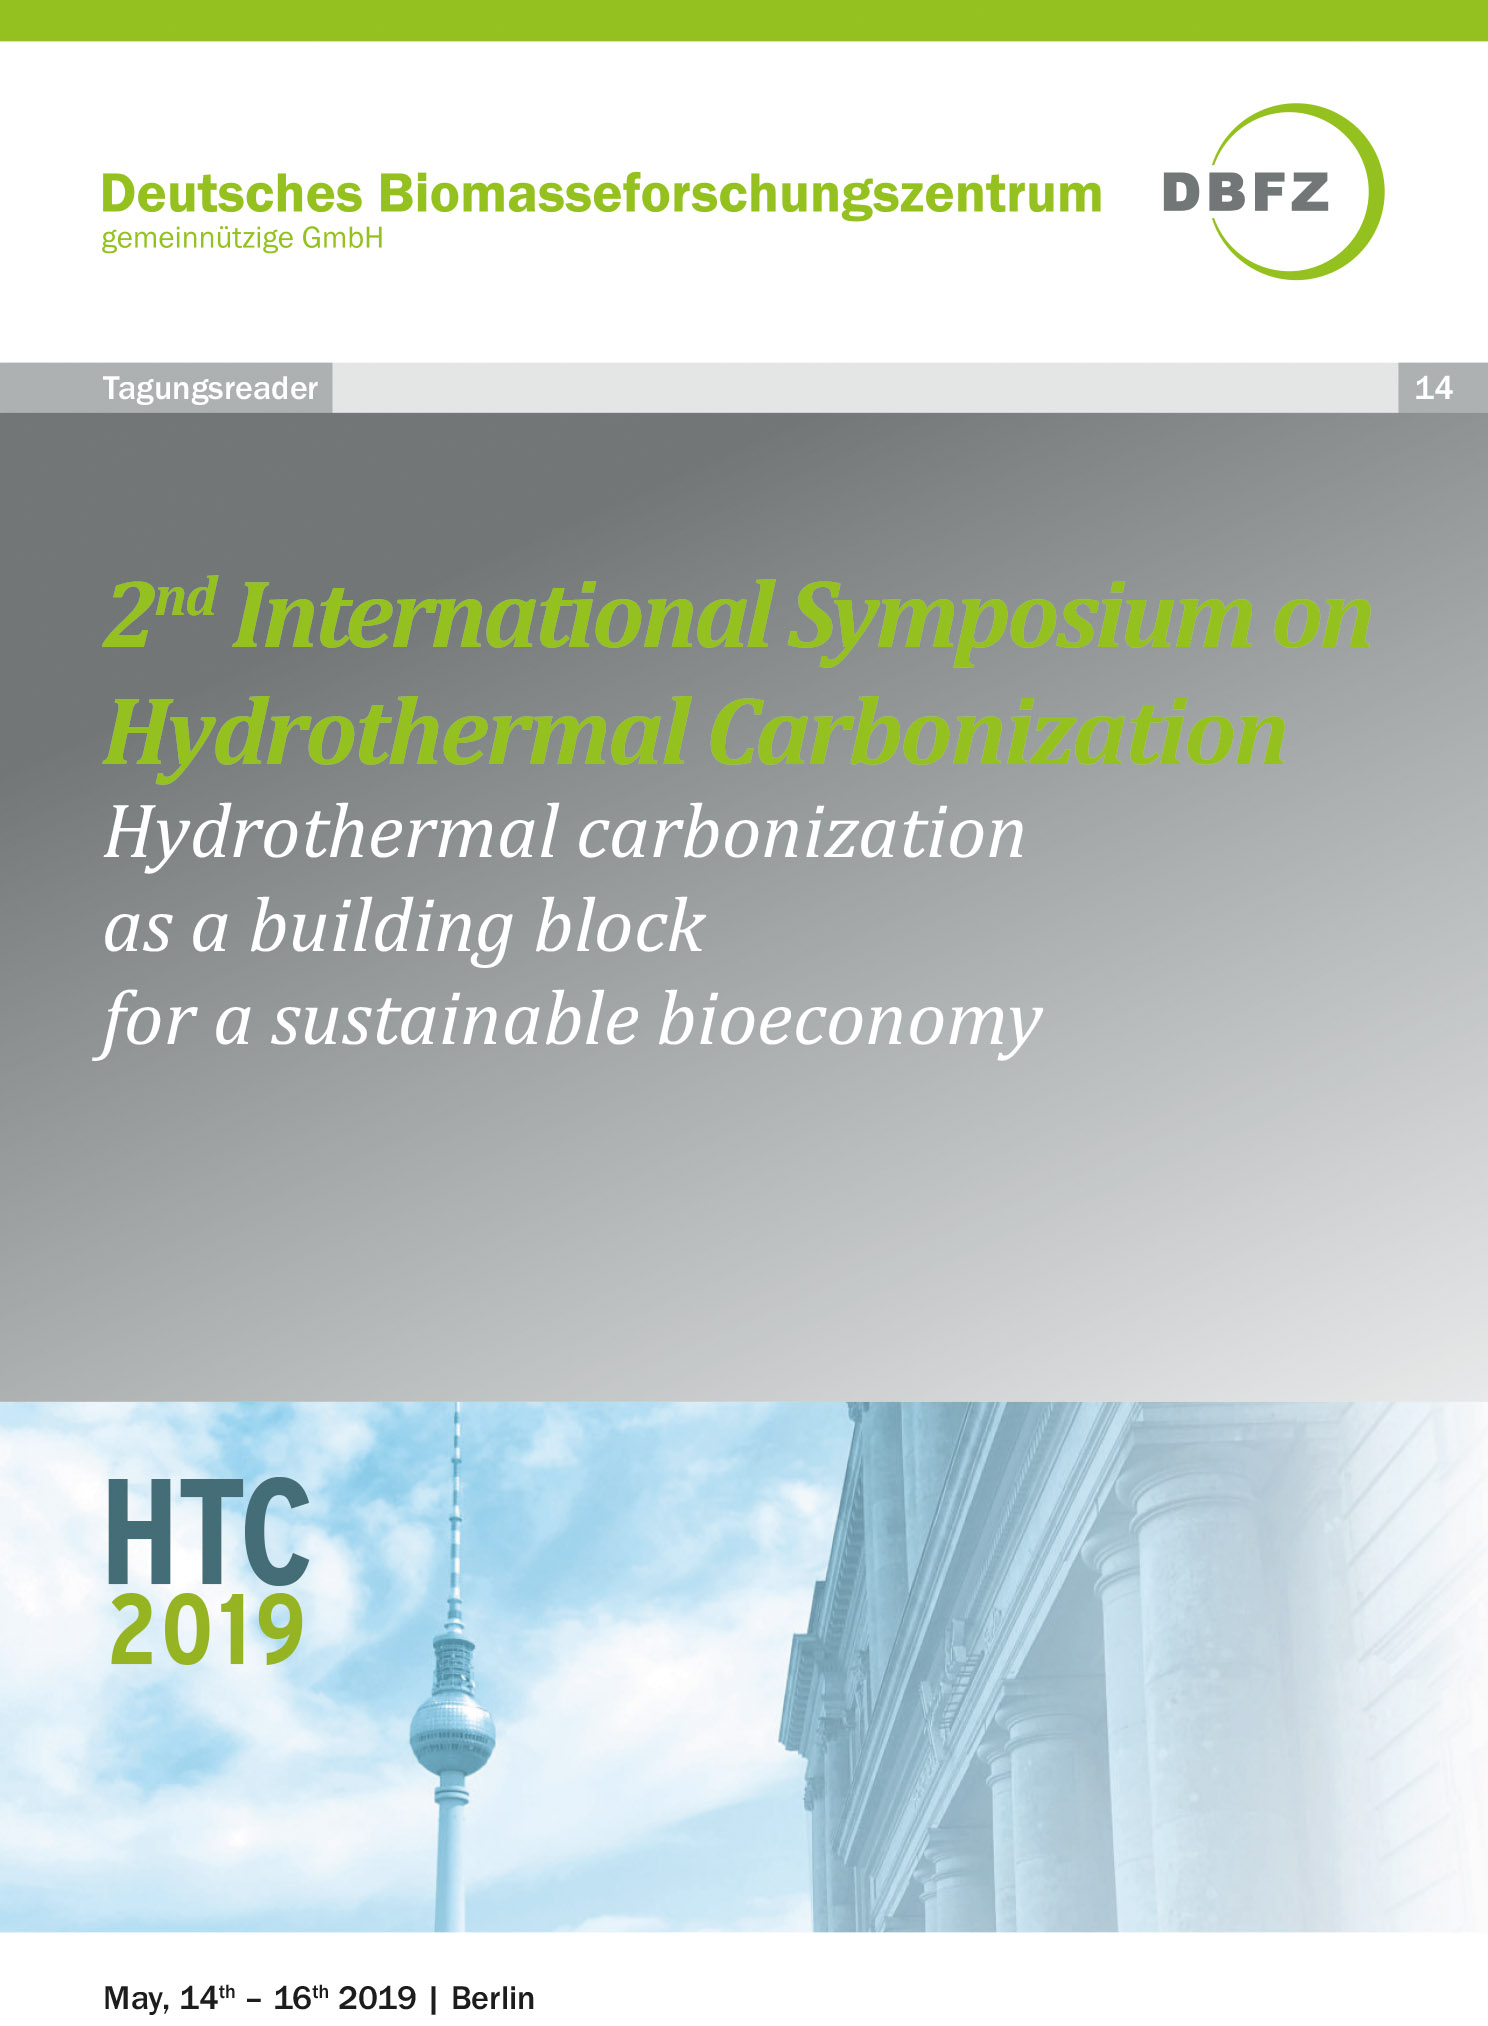 2nd International Symposium on Hydrothermal Carbonization